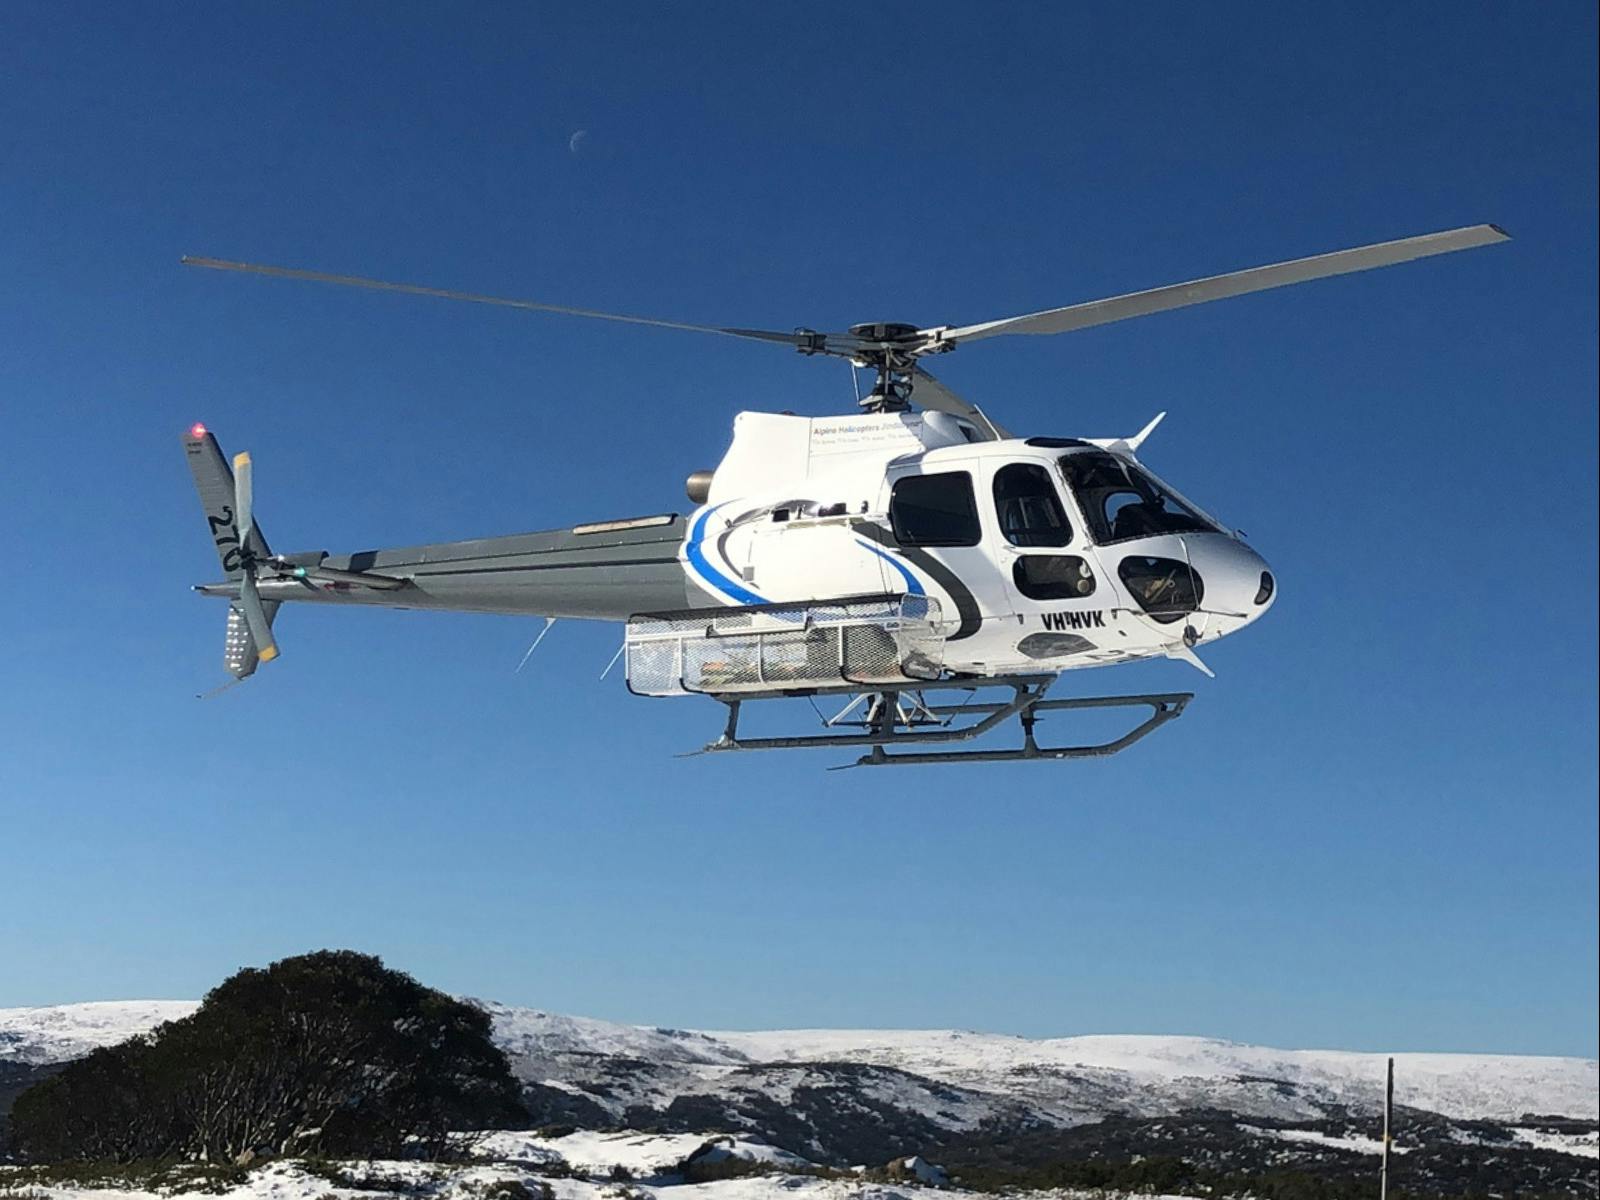 Take a Helicopter scenic flight  over Falls Creek, Hotham, Mt Beauty & visit Jindabyne, Kosciuszko.